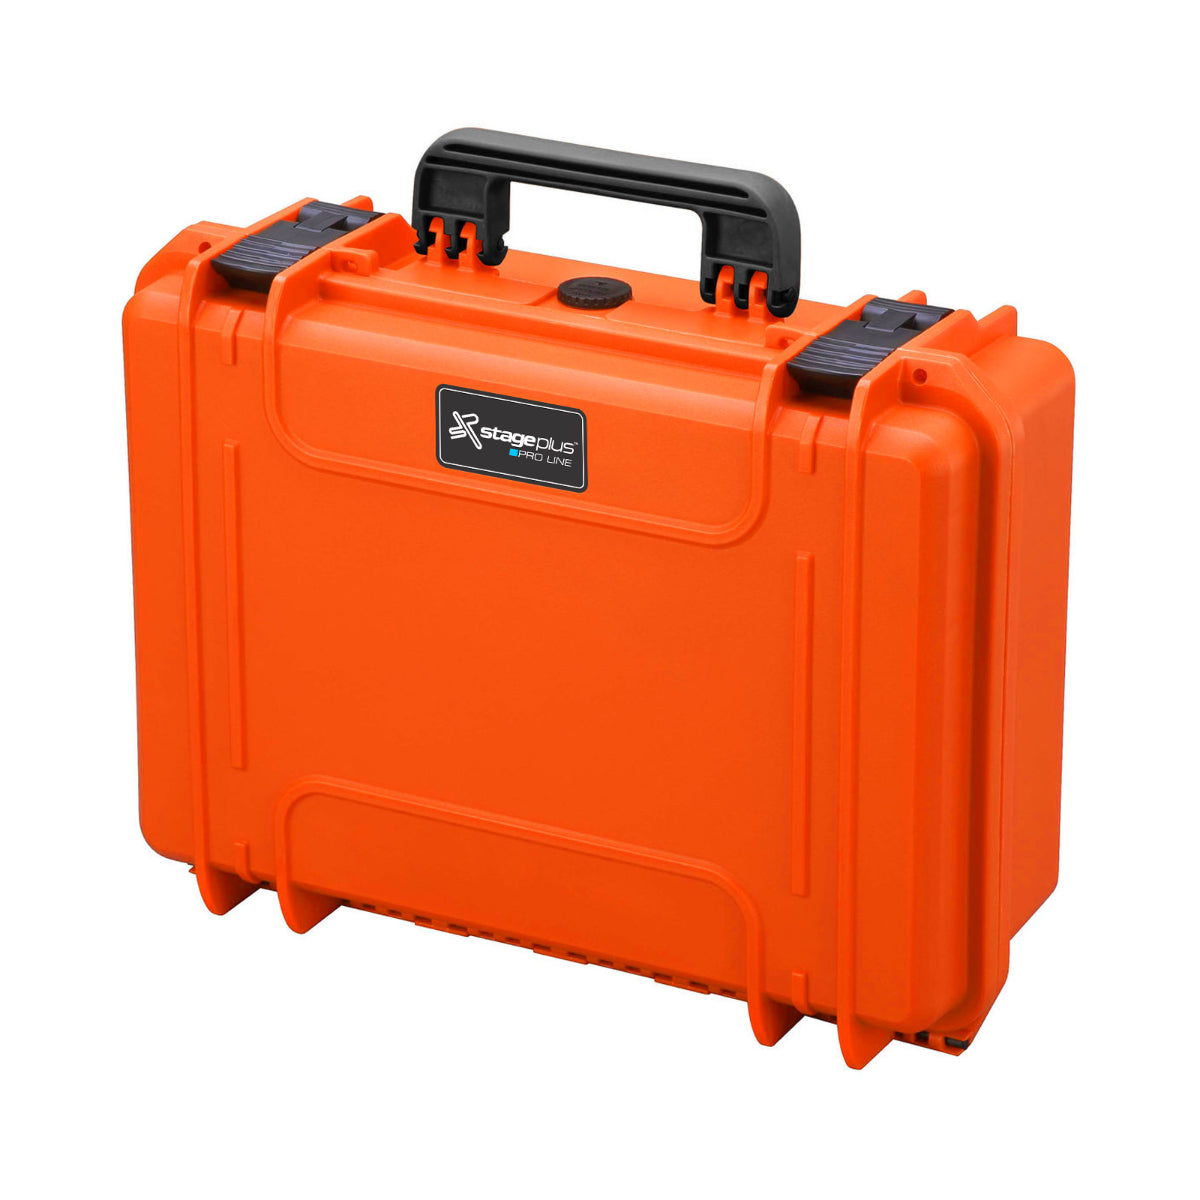 SP PRO 235H155S Orange Carry Case, Cubed Foam, ID: L235xW180xH156mm